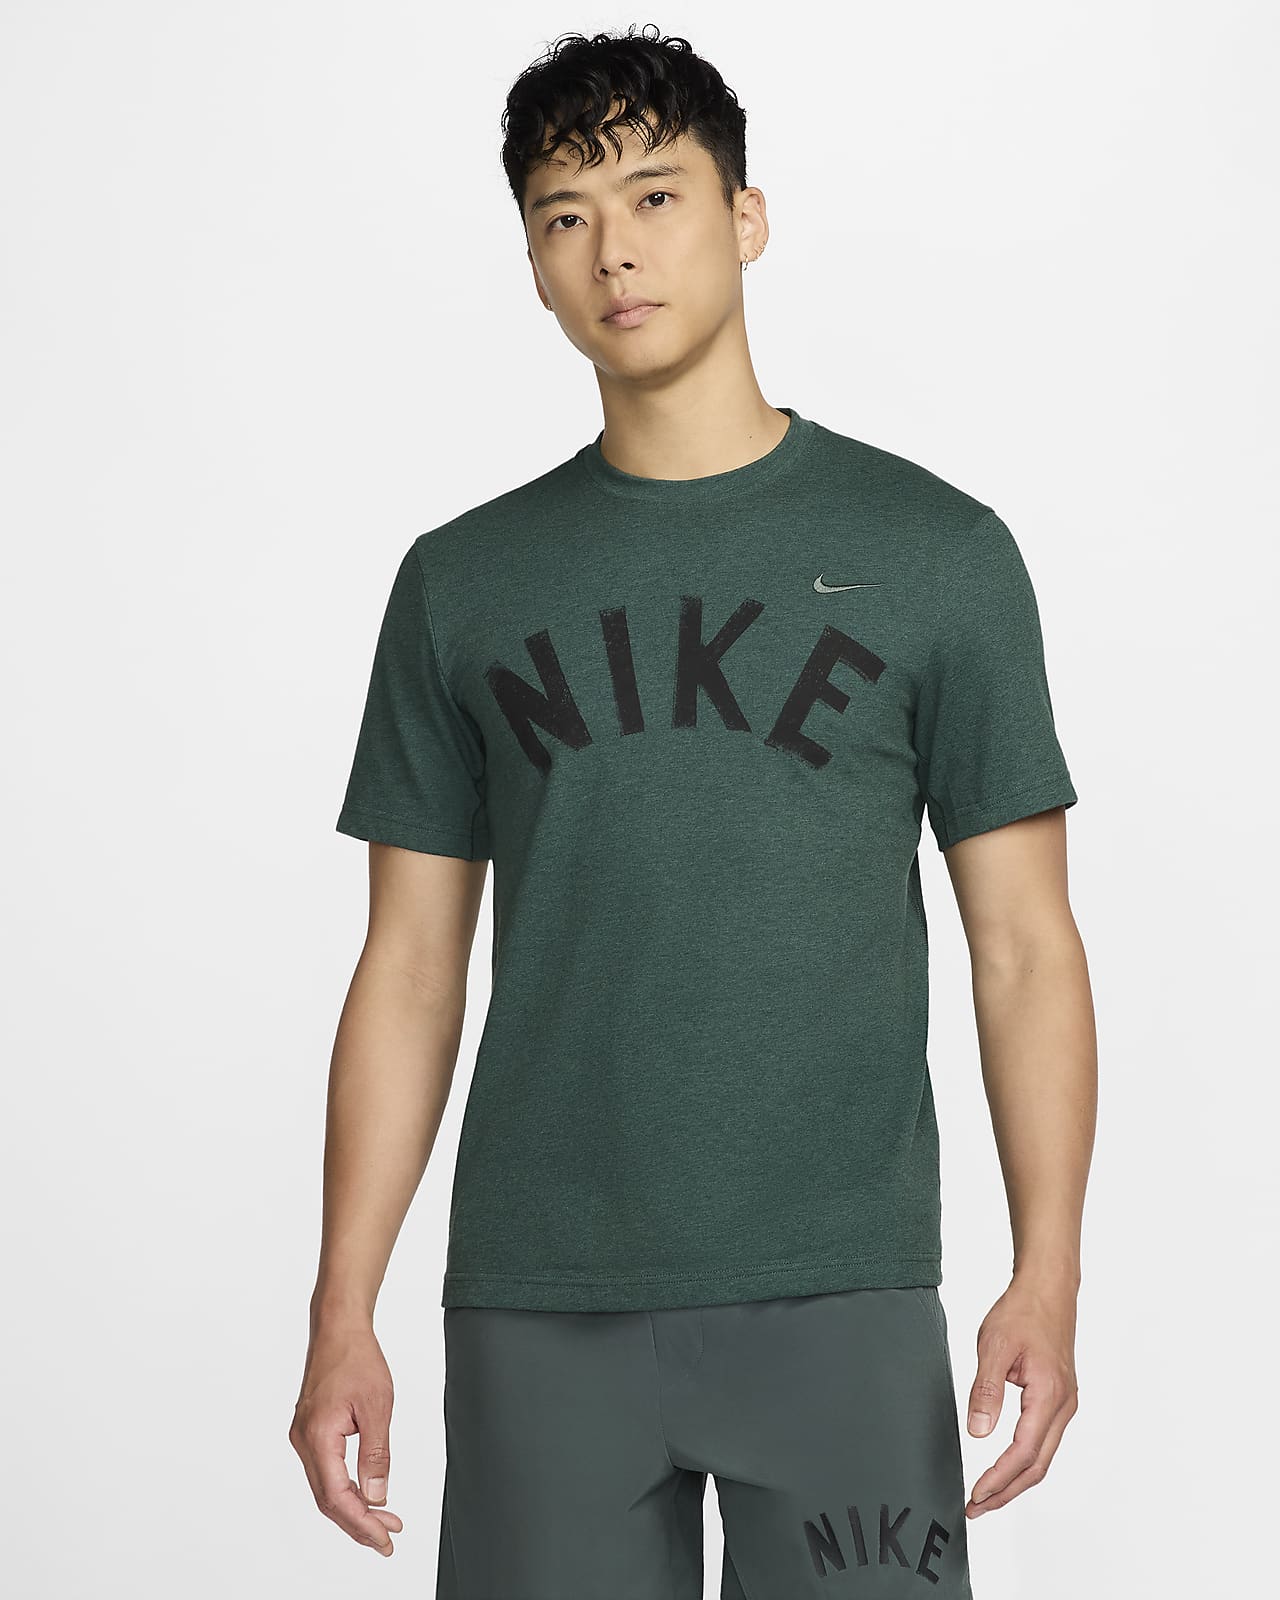 Nike Primary Swoosh Men's Dri-FIT Short-Sleeve Versatile Top